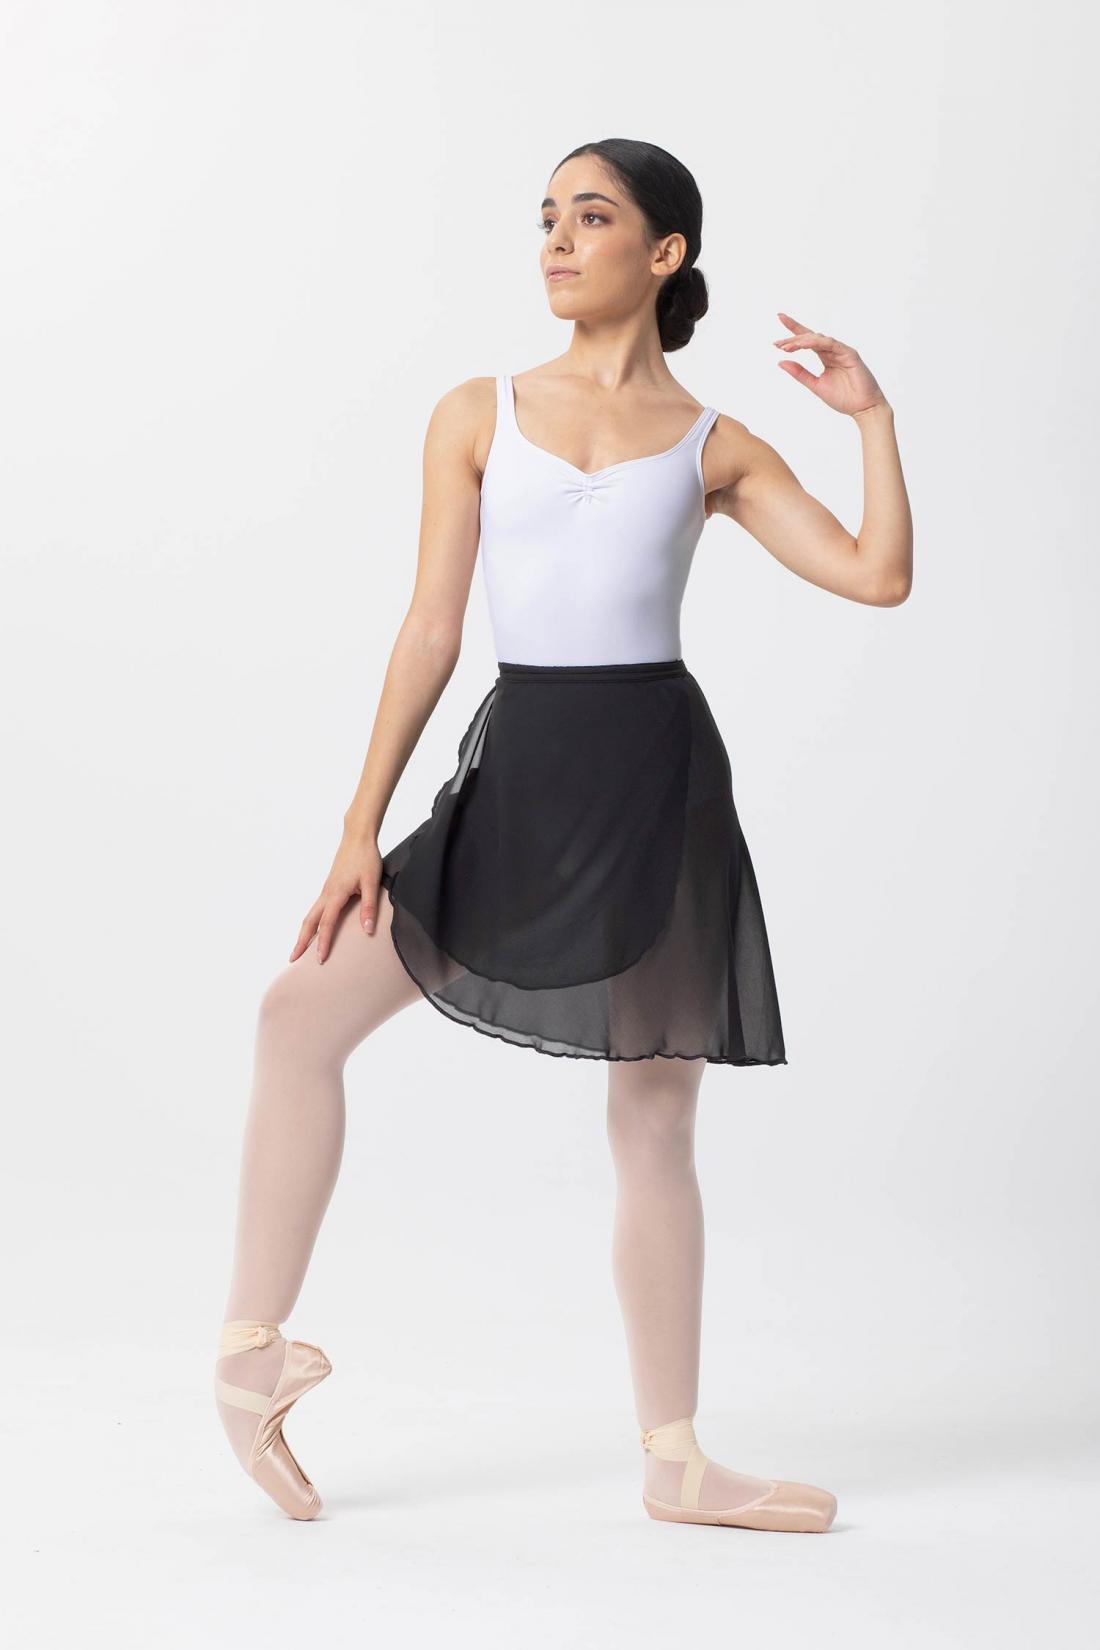 Intermezzo Giselle Long Wrap Ballet Dance Skirt with ties